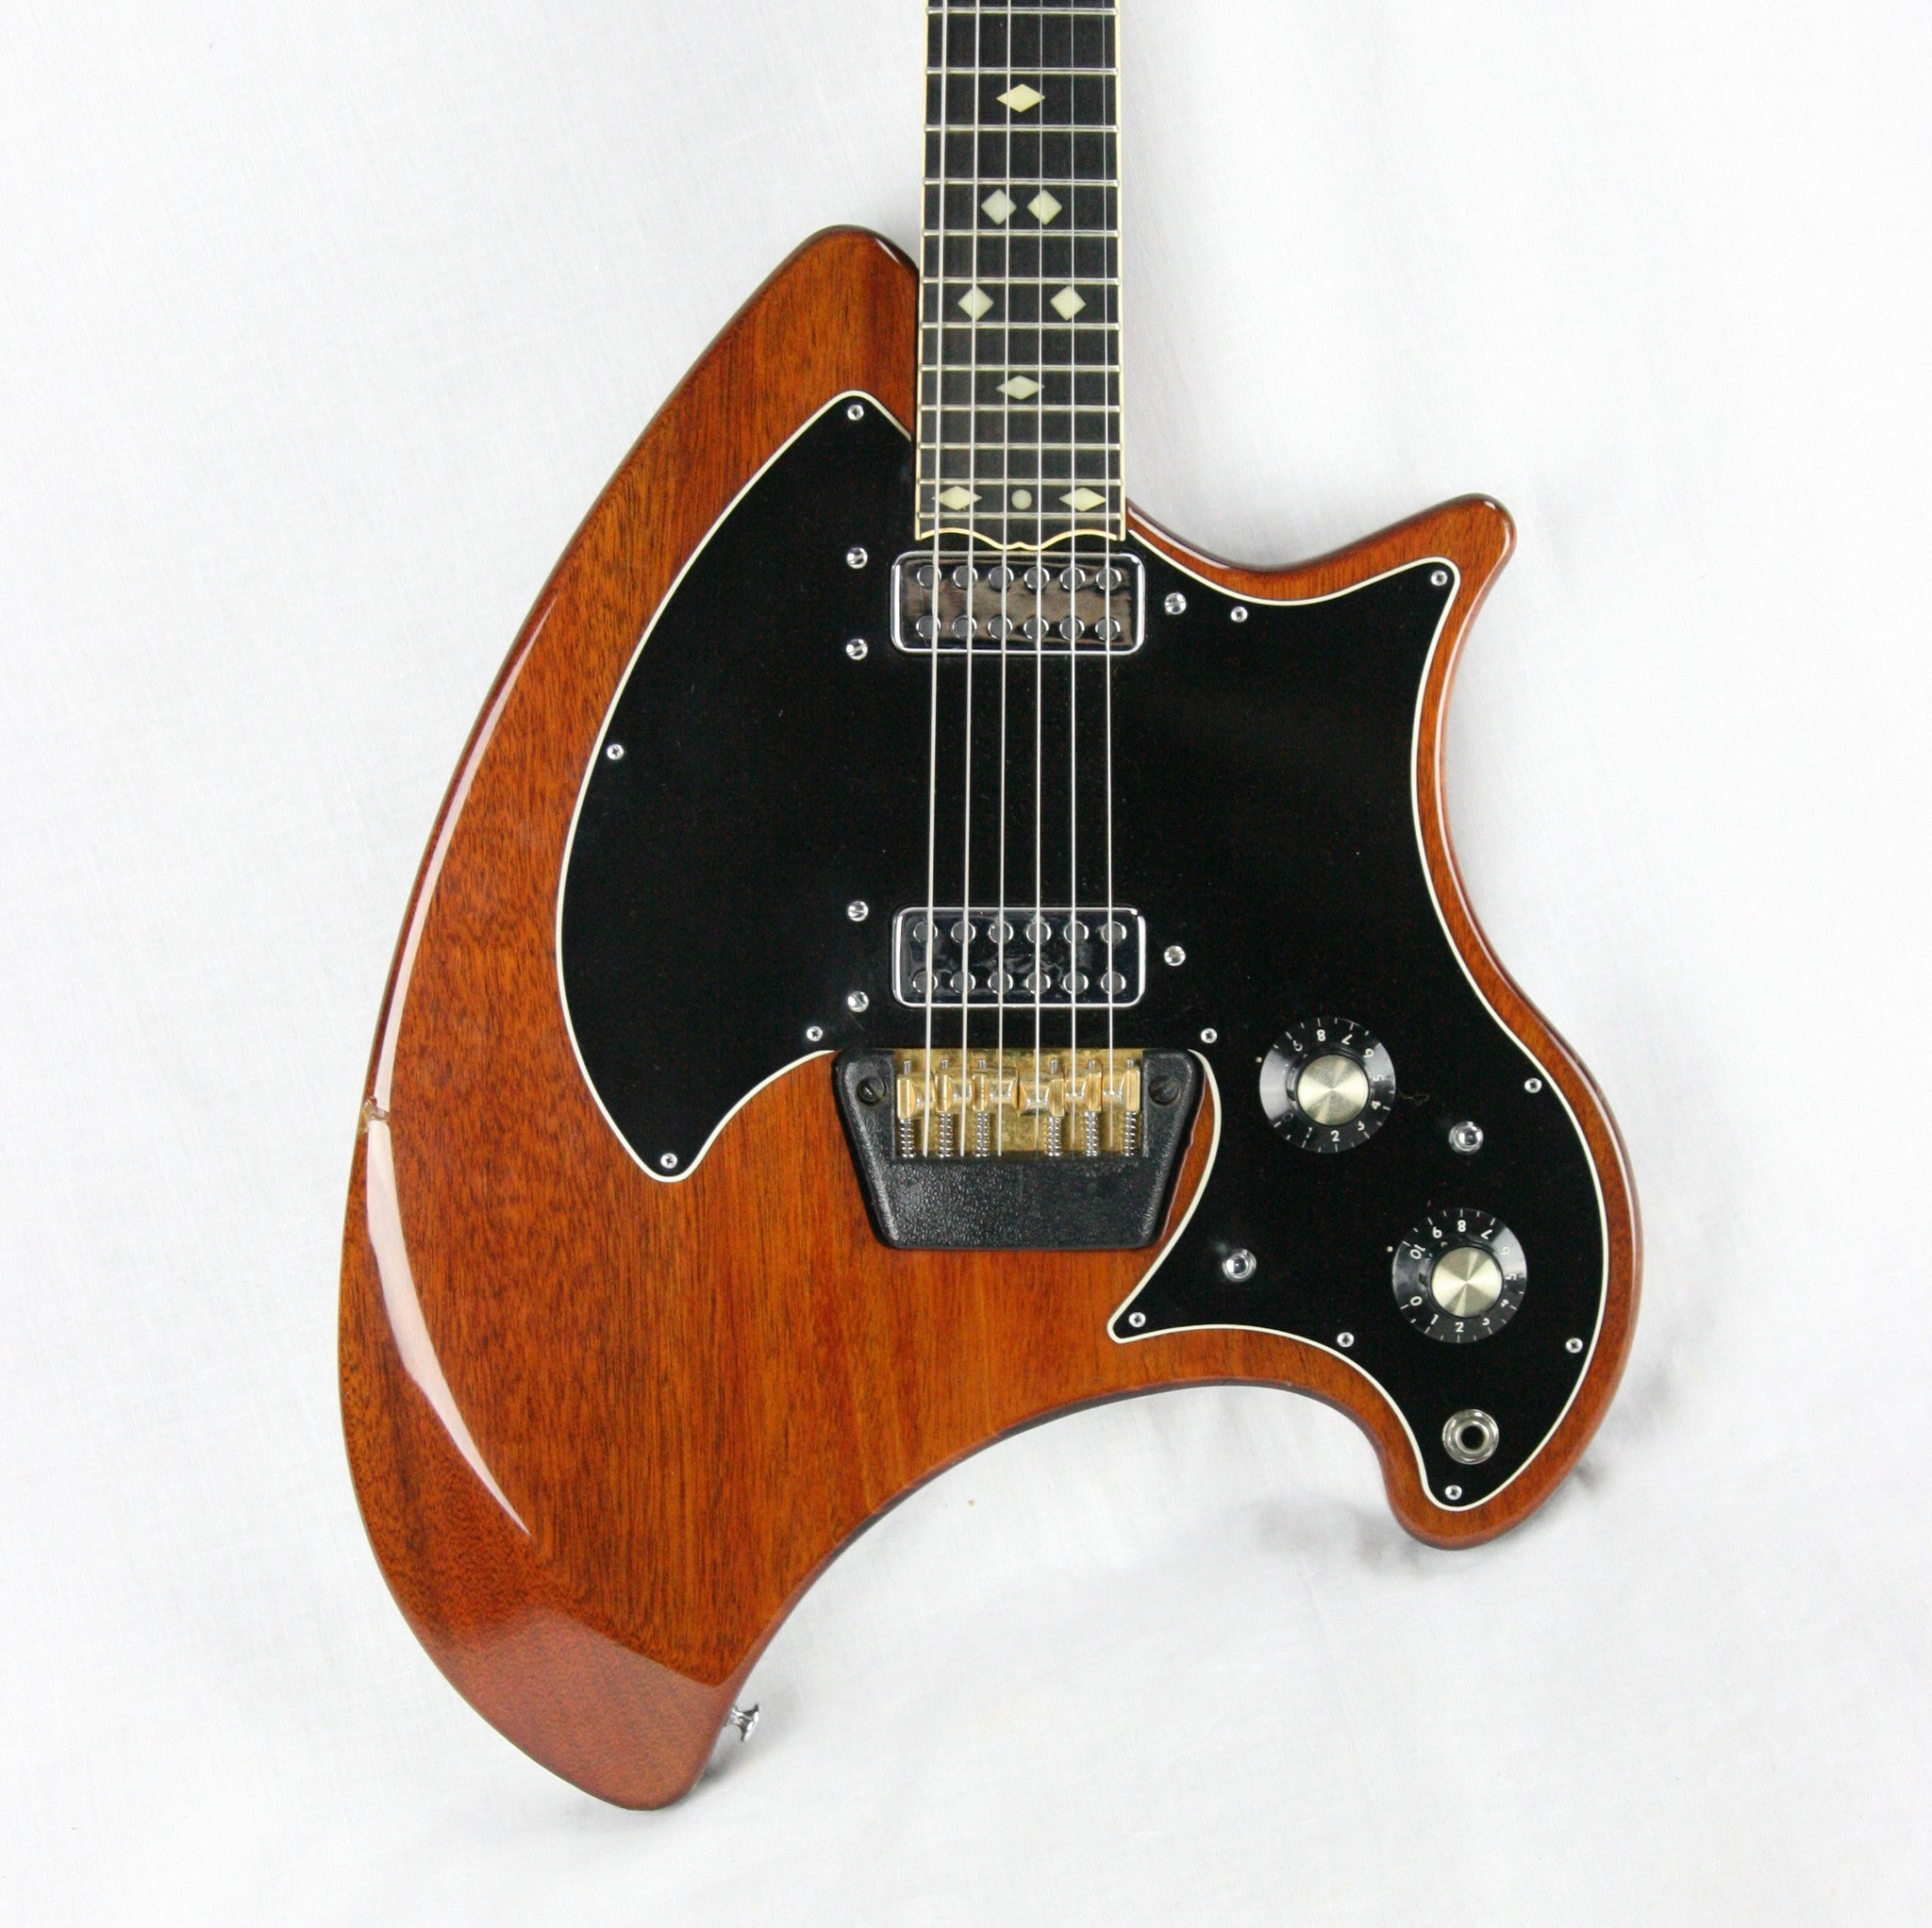 *SOLD*  1974 Ovation Deacon Vintage Electric Guitar! Active Electronics, higher specs, Fancy Breadwinner